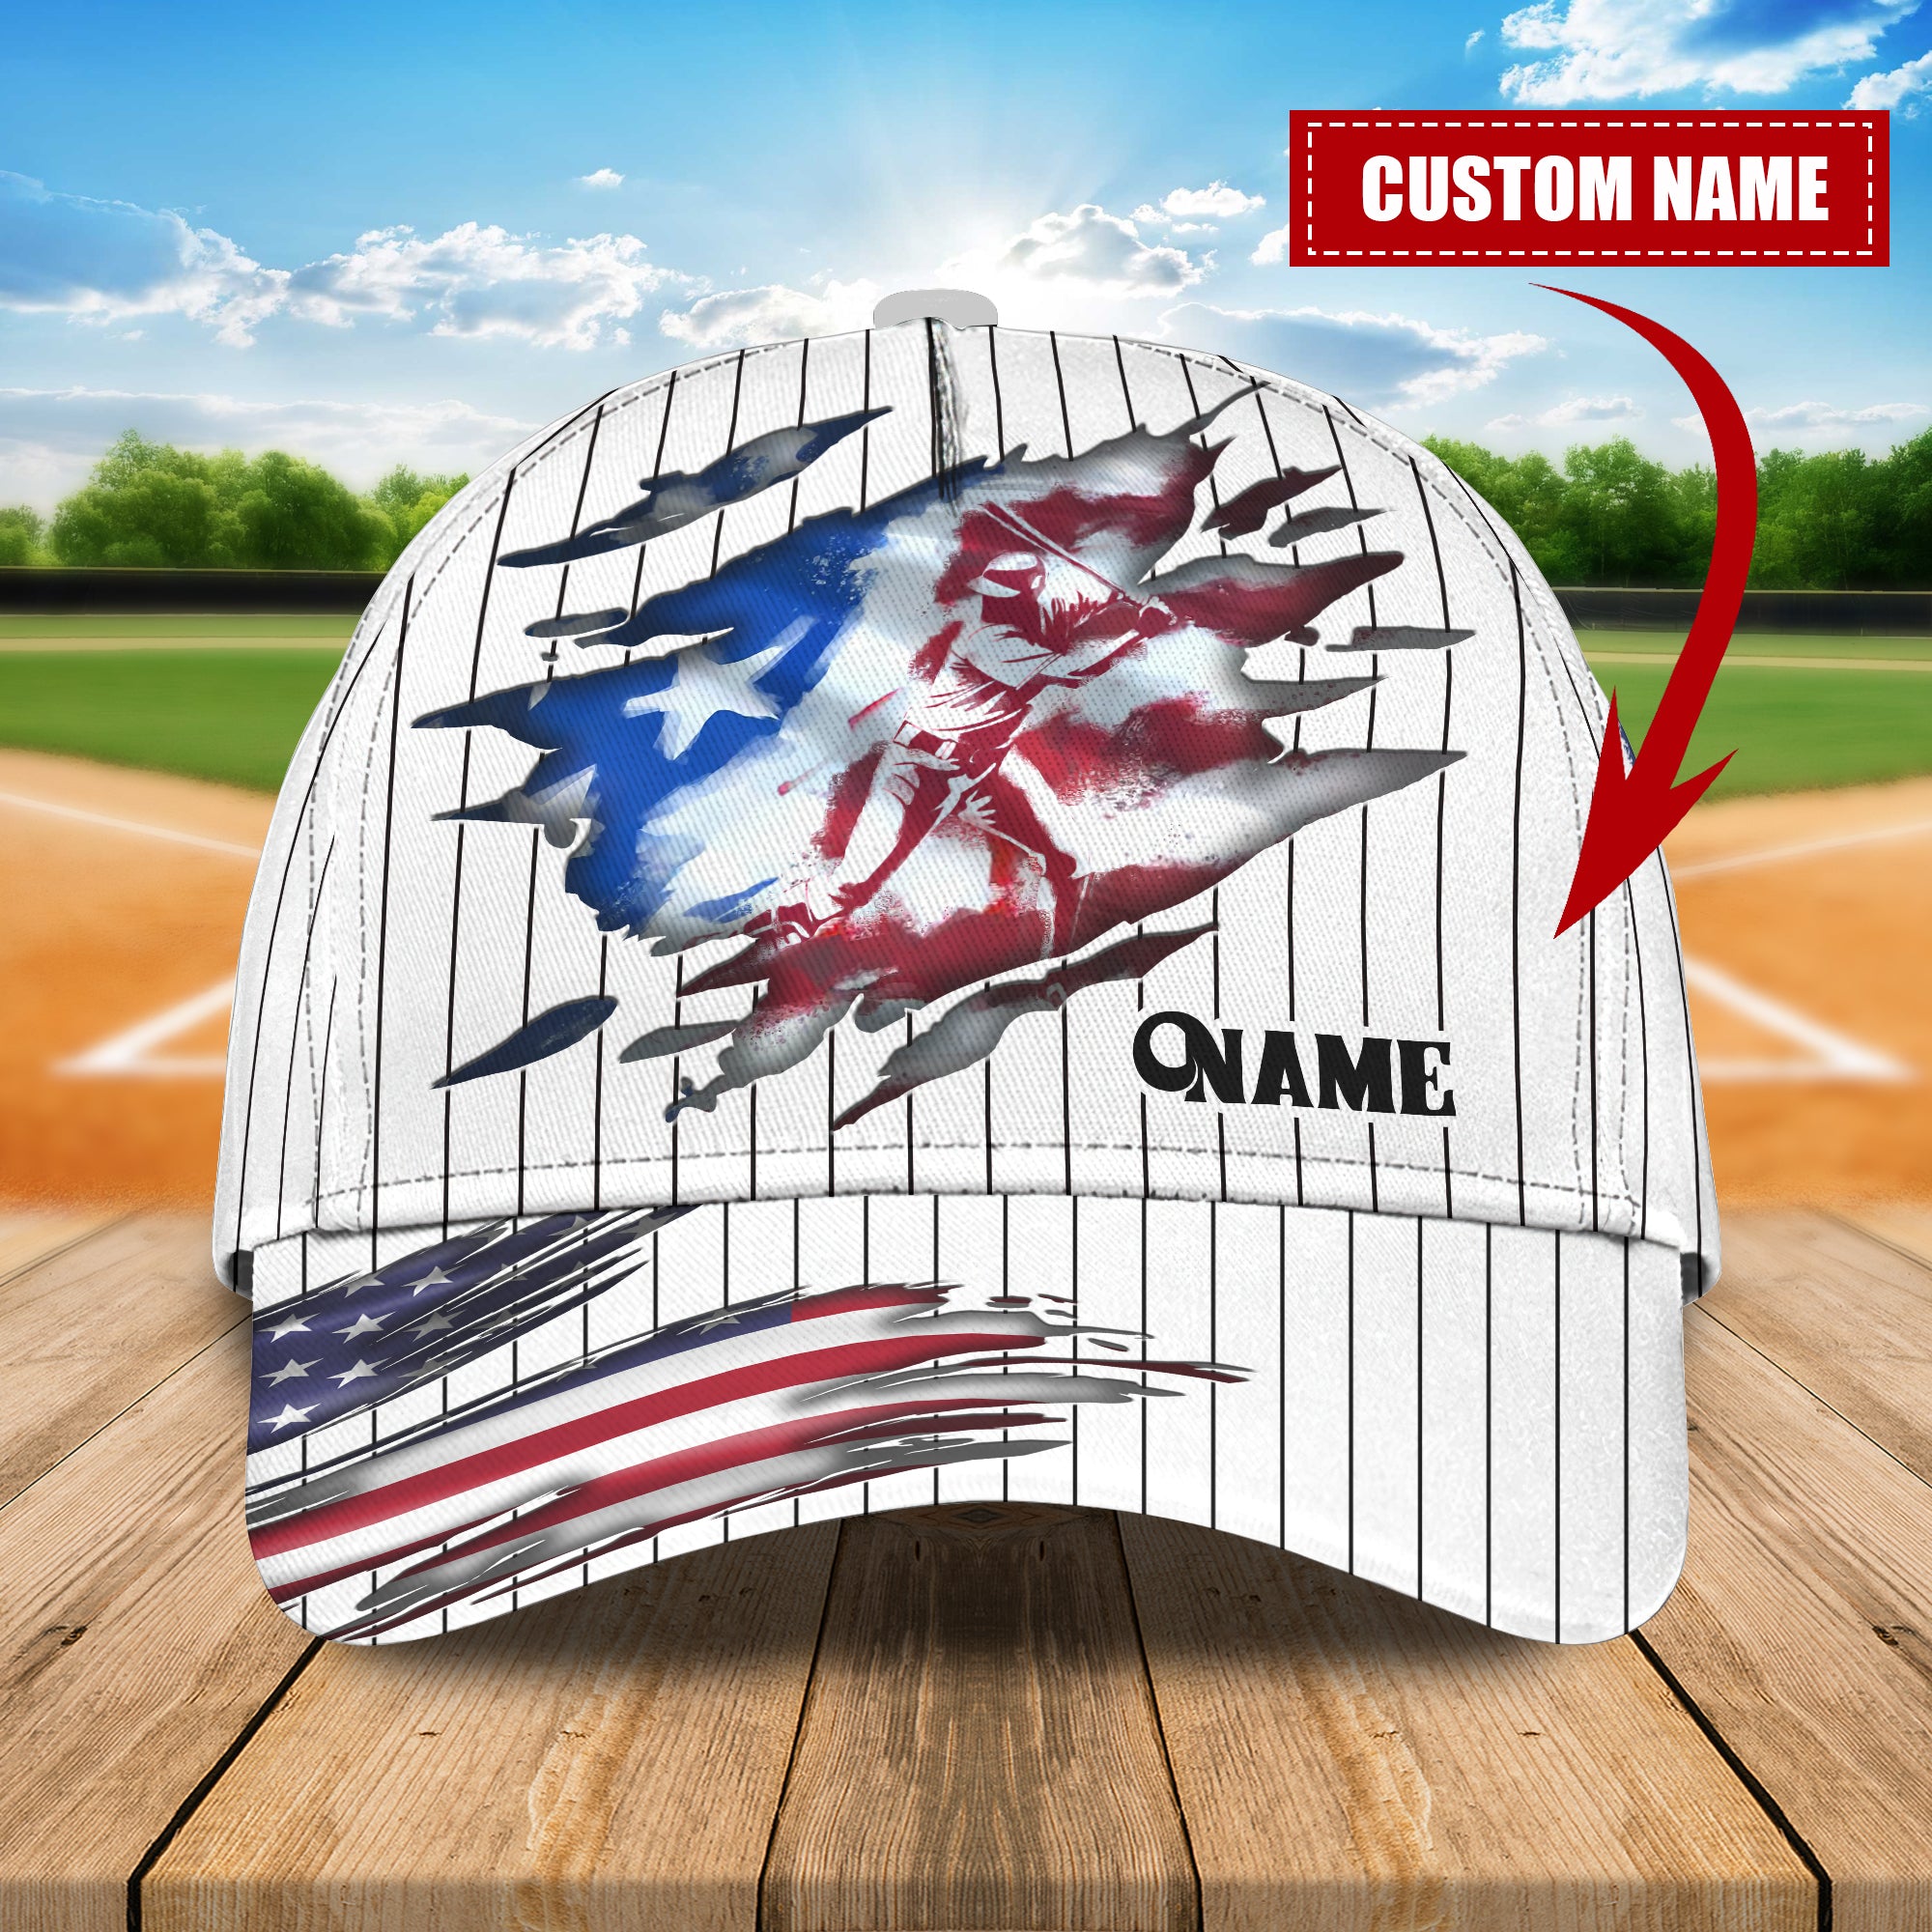 nnta - Personalized Name Cap - Baseball 01